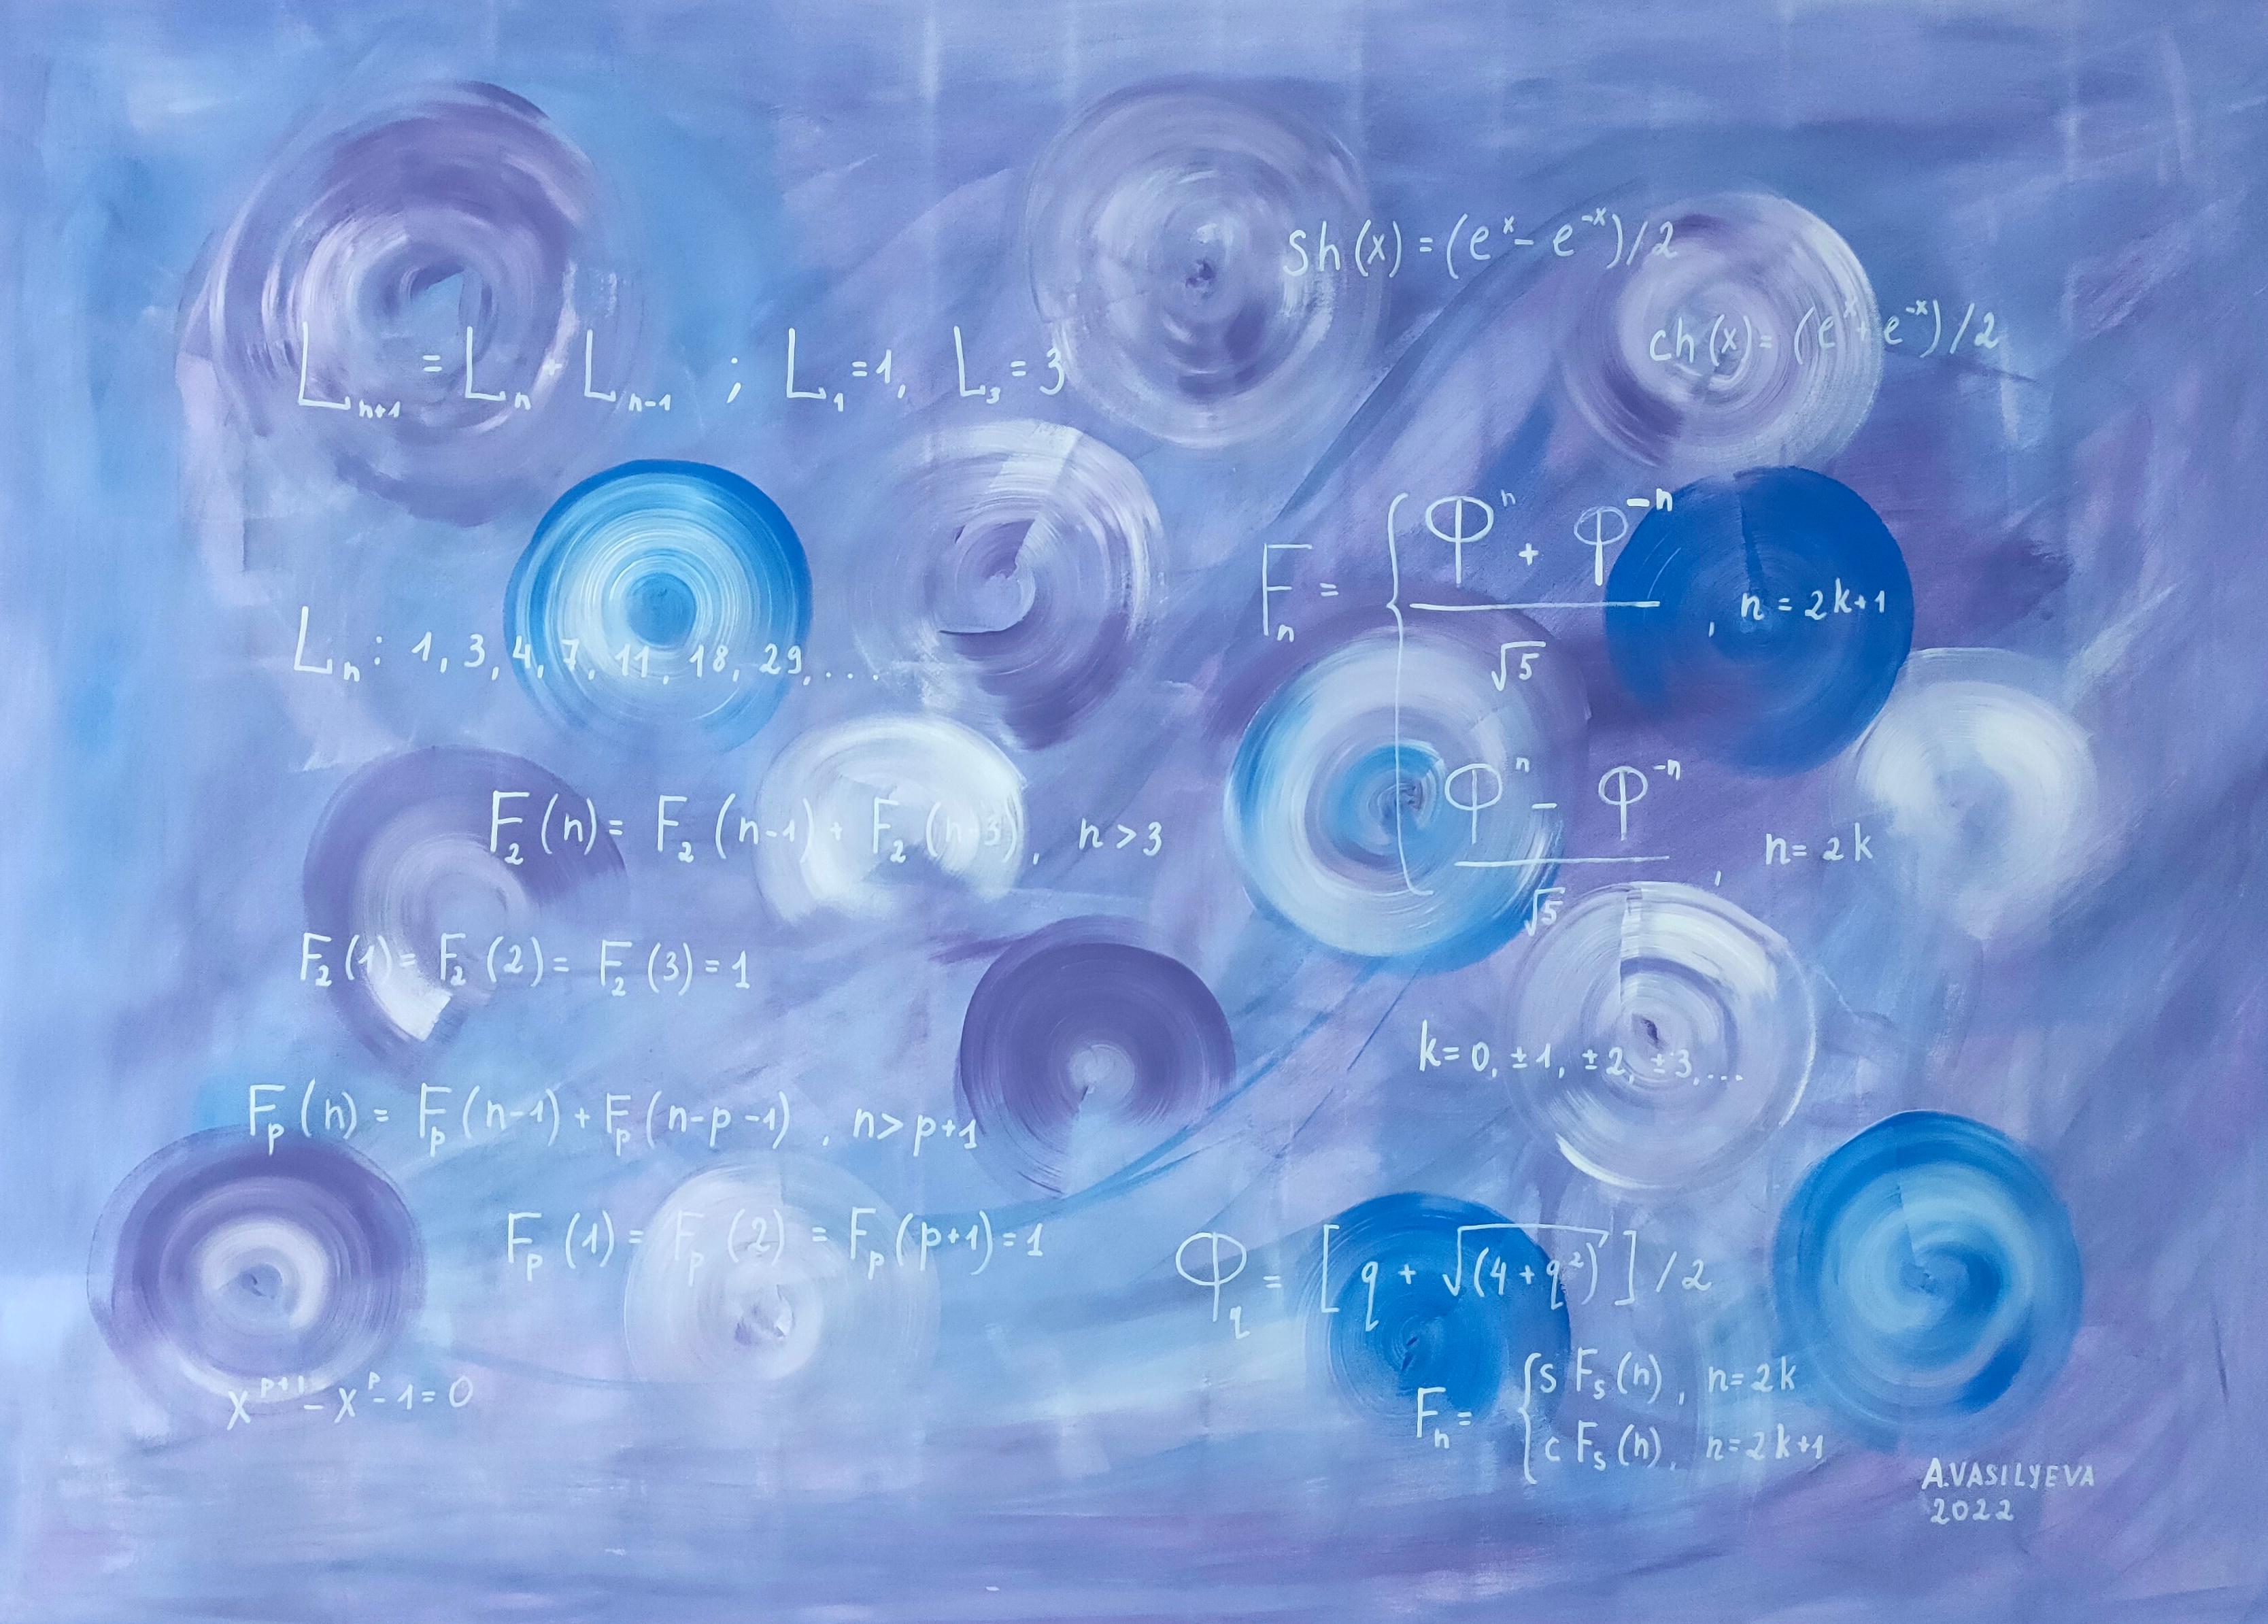 Anastasia Vasilyeva Abstract Painting - Peace and Harmony, Science Art